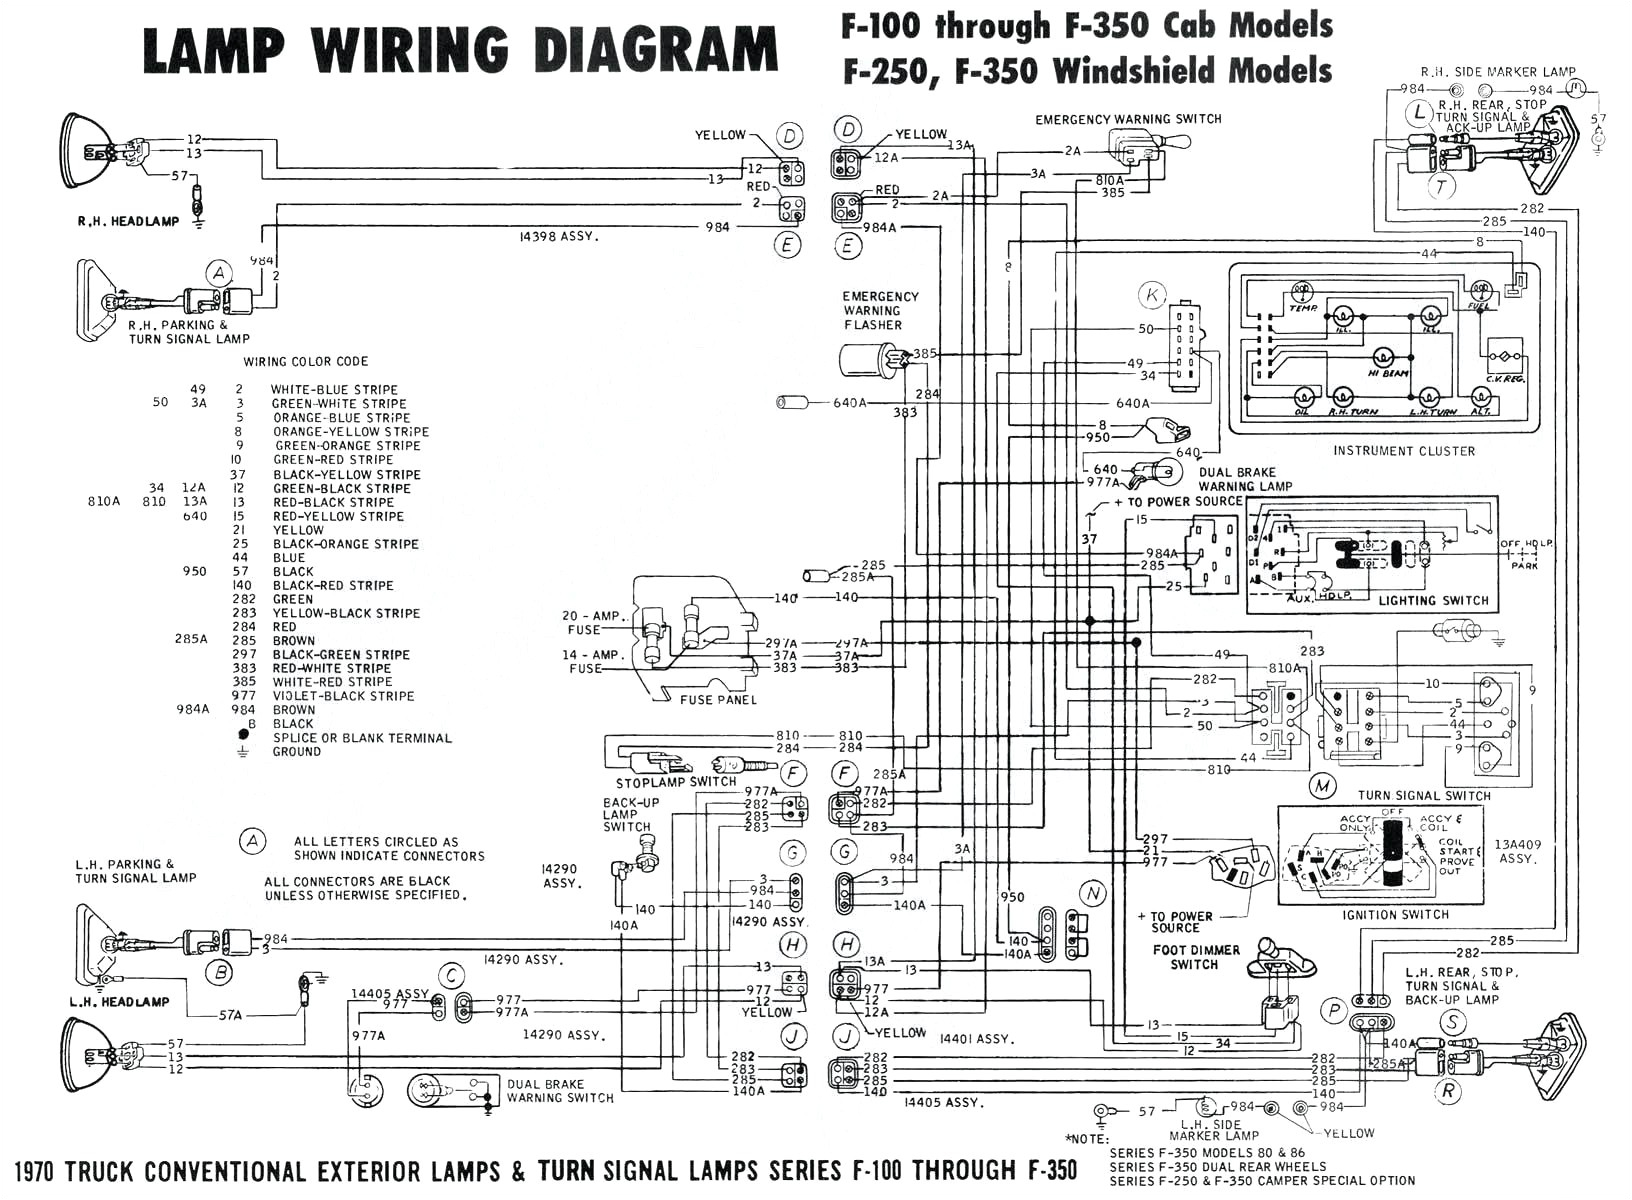 soldering iron control circuit diagram tradeoficcom book diagram pulse power amplifier circuit diagram tradeoficcom wiring diagram